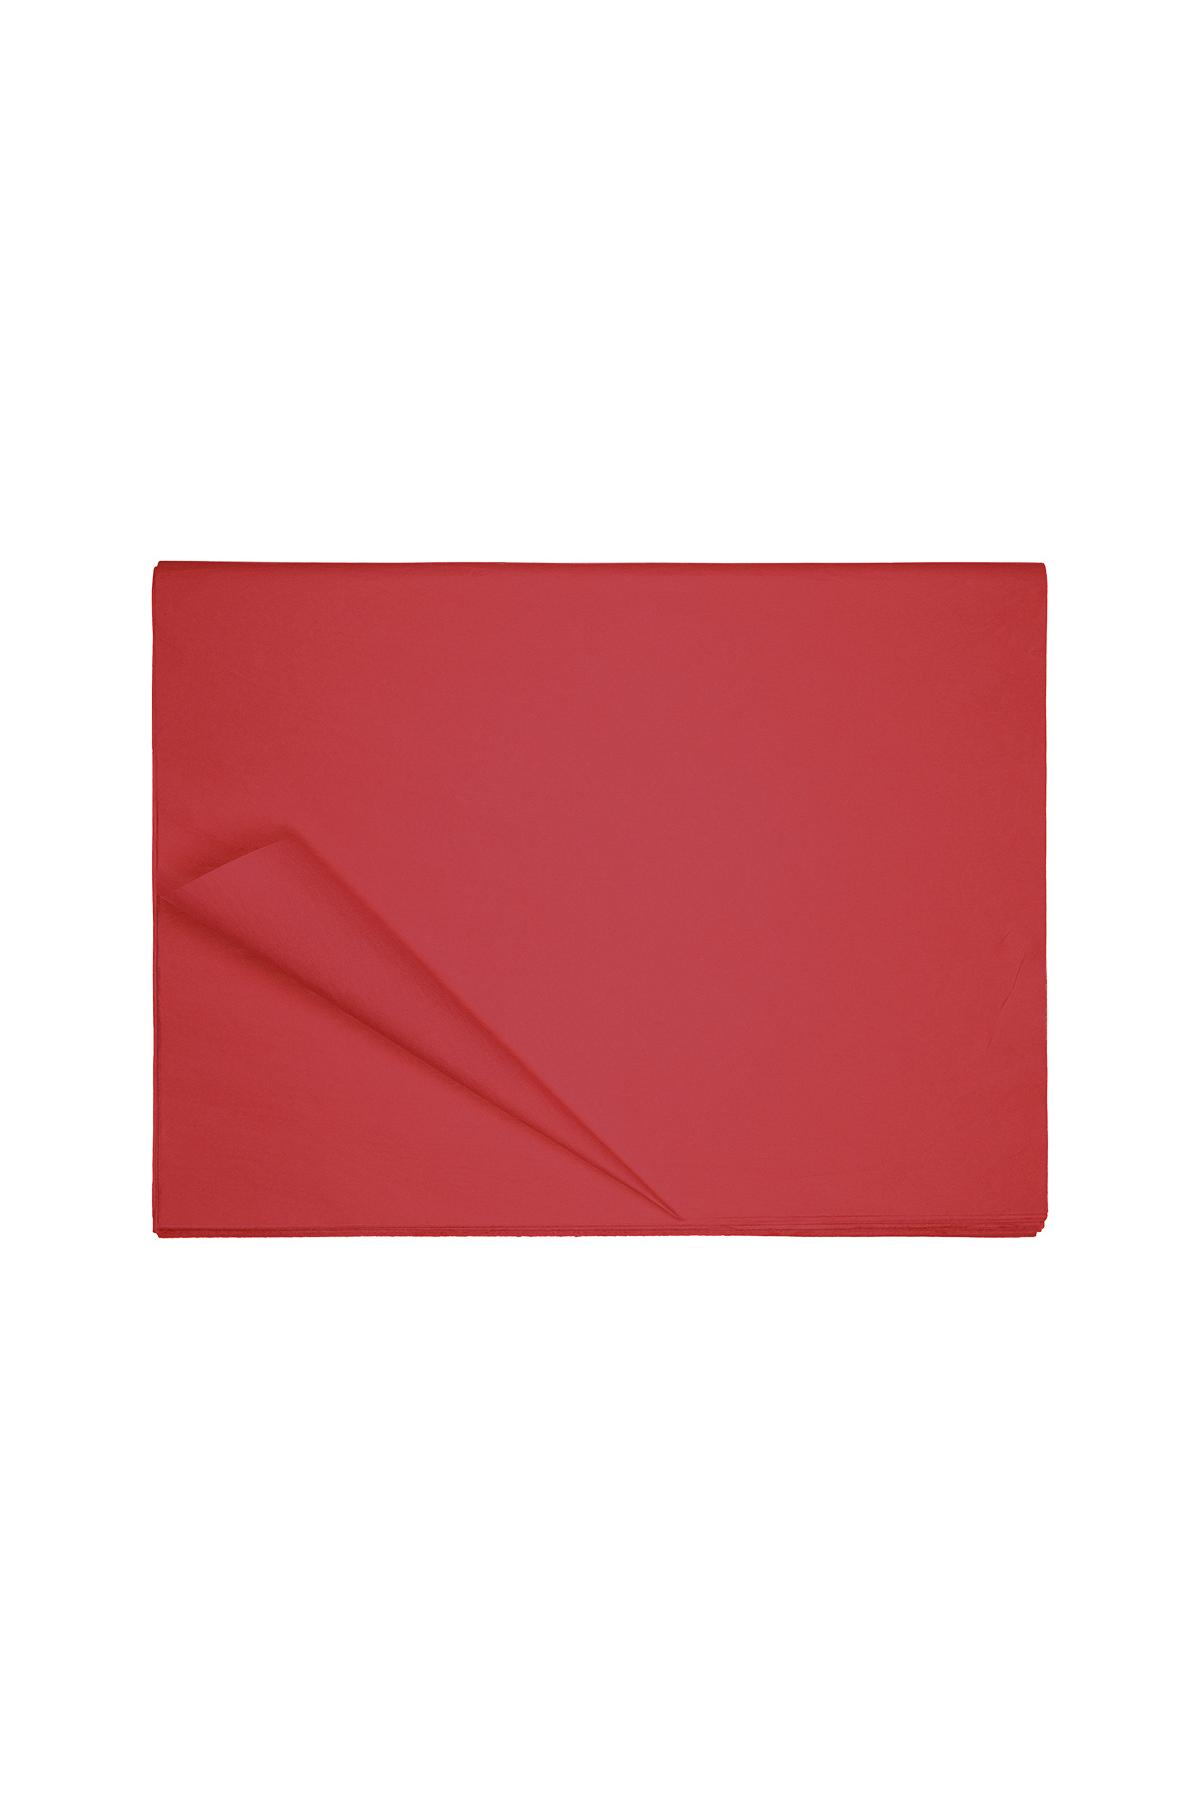 Papel secante - Papel rojo h5 